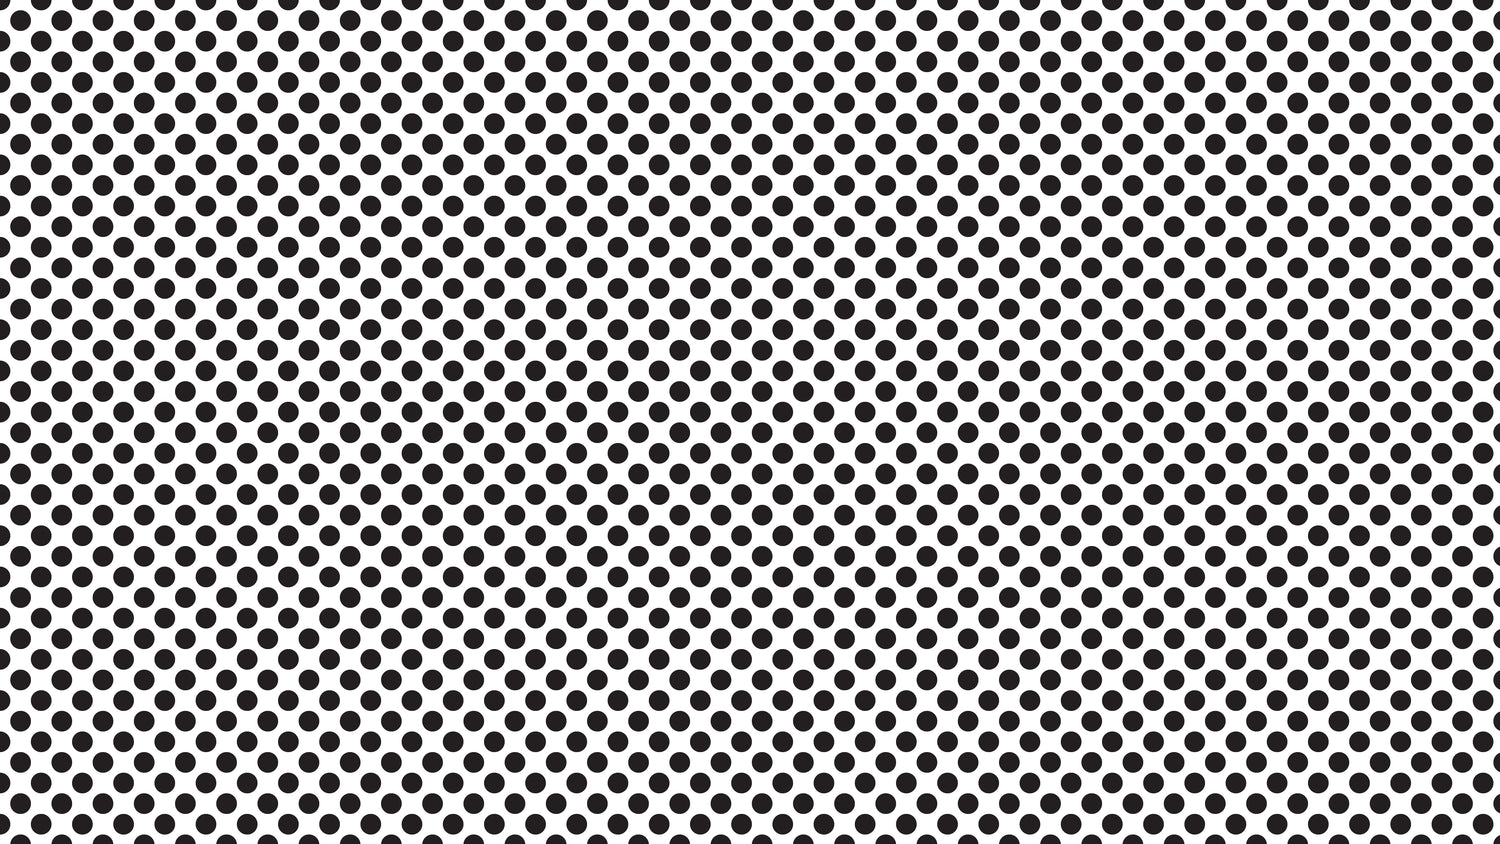 Ben Day Dots Black & White by Studio Ten Design